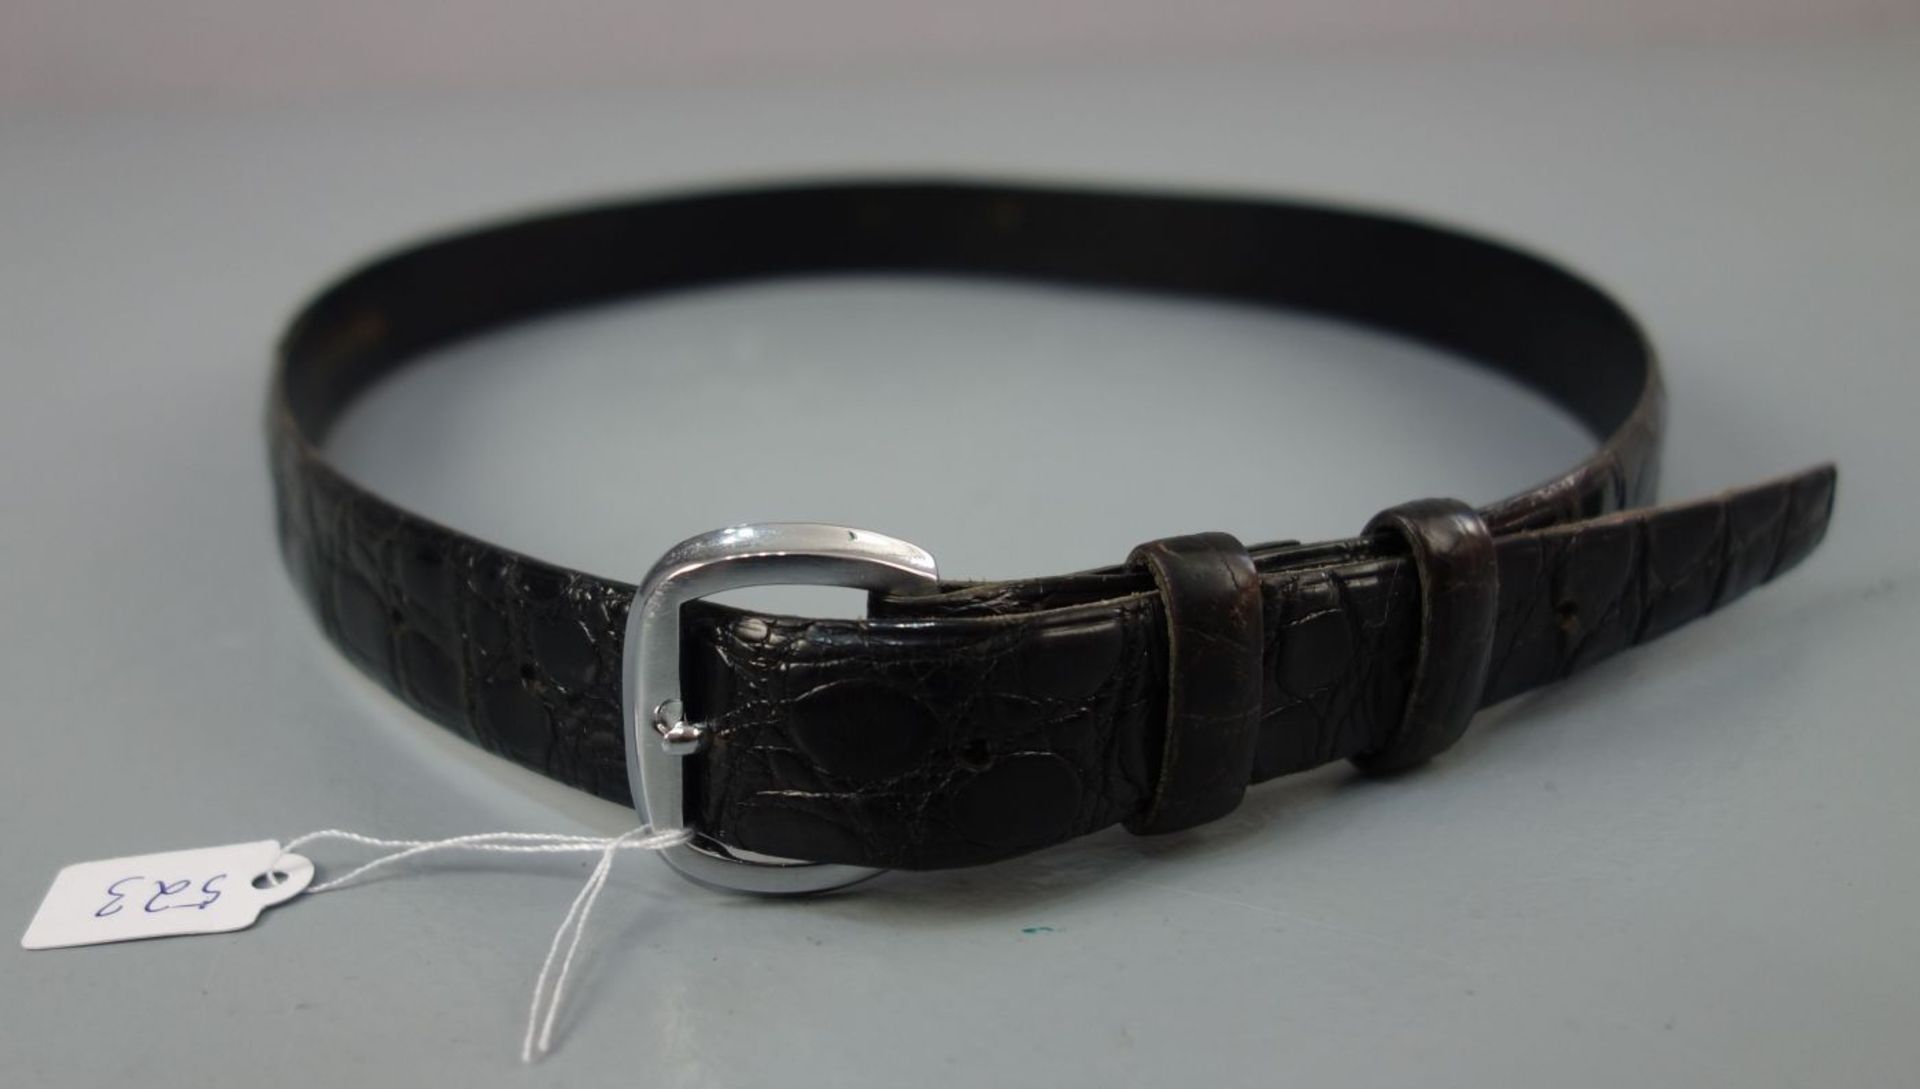 SCHWARZER KROKO-LEDERGÜRTEL / leather belt, bez. "Made in Italy / c. wirschke". Schmaler